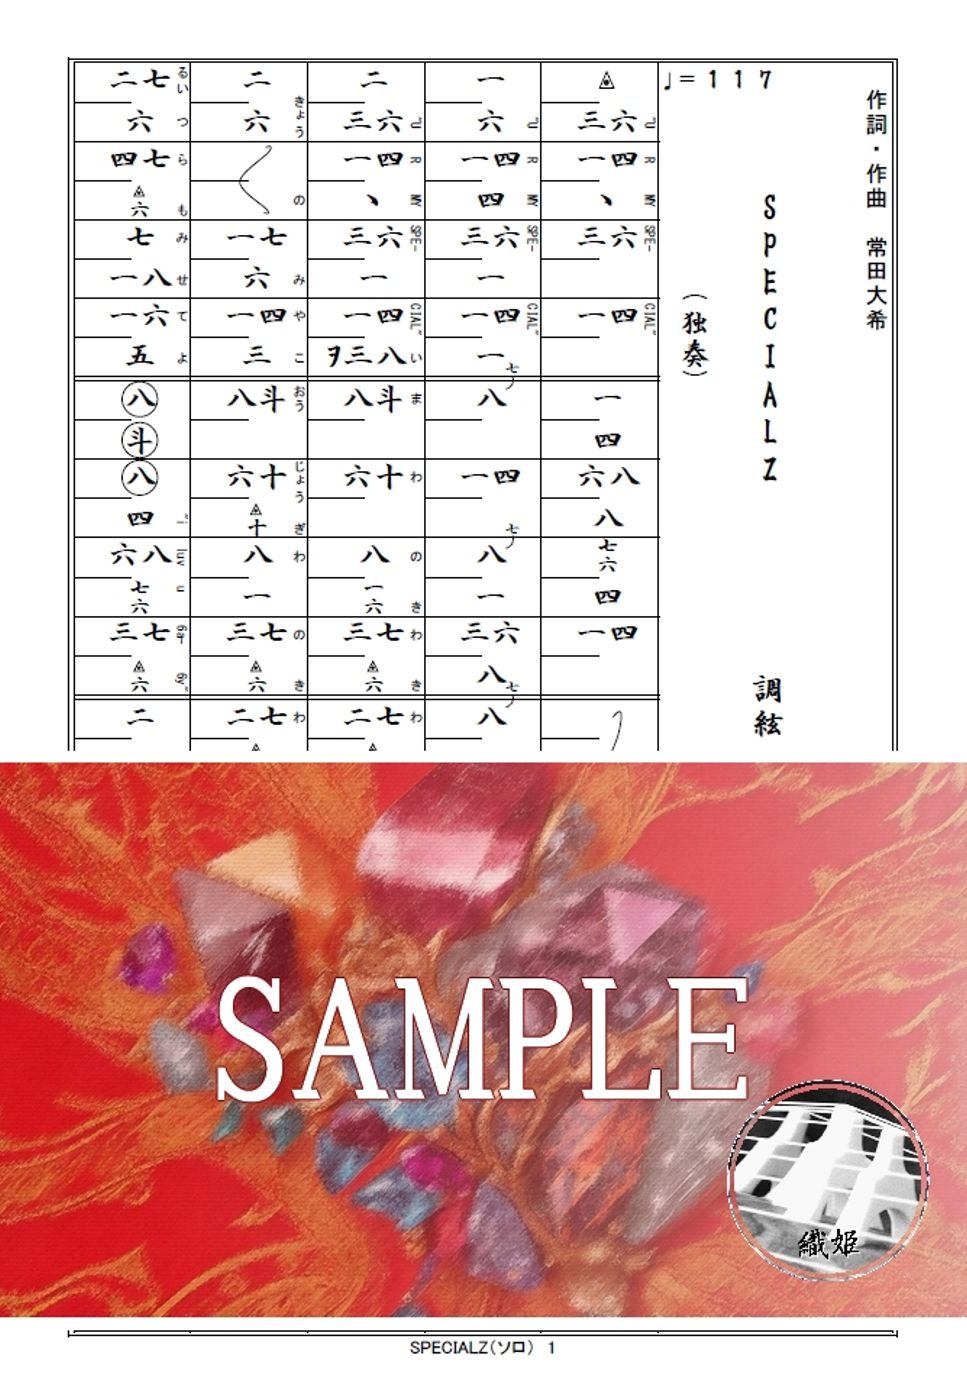 King Gnu - 箏譜　SPECIALZ（ソロ） (TVアニメ『呪術廻戦』「渋谷事変」オープニングテーマ) by 織姫